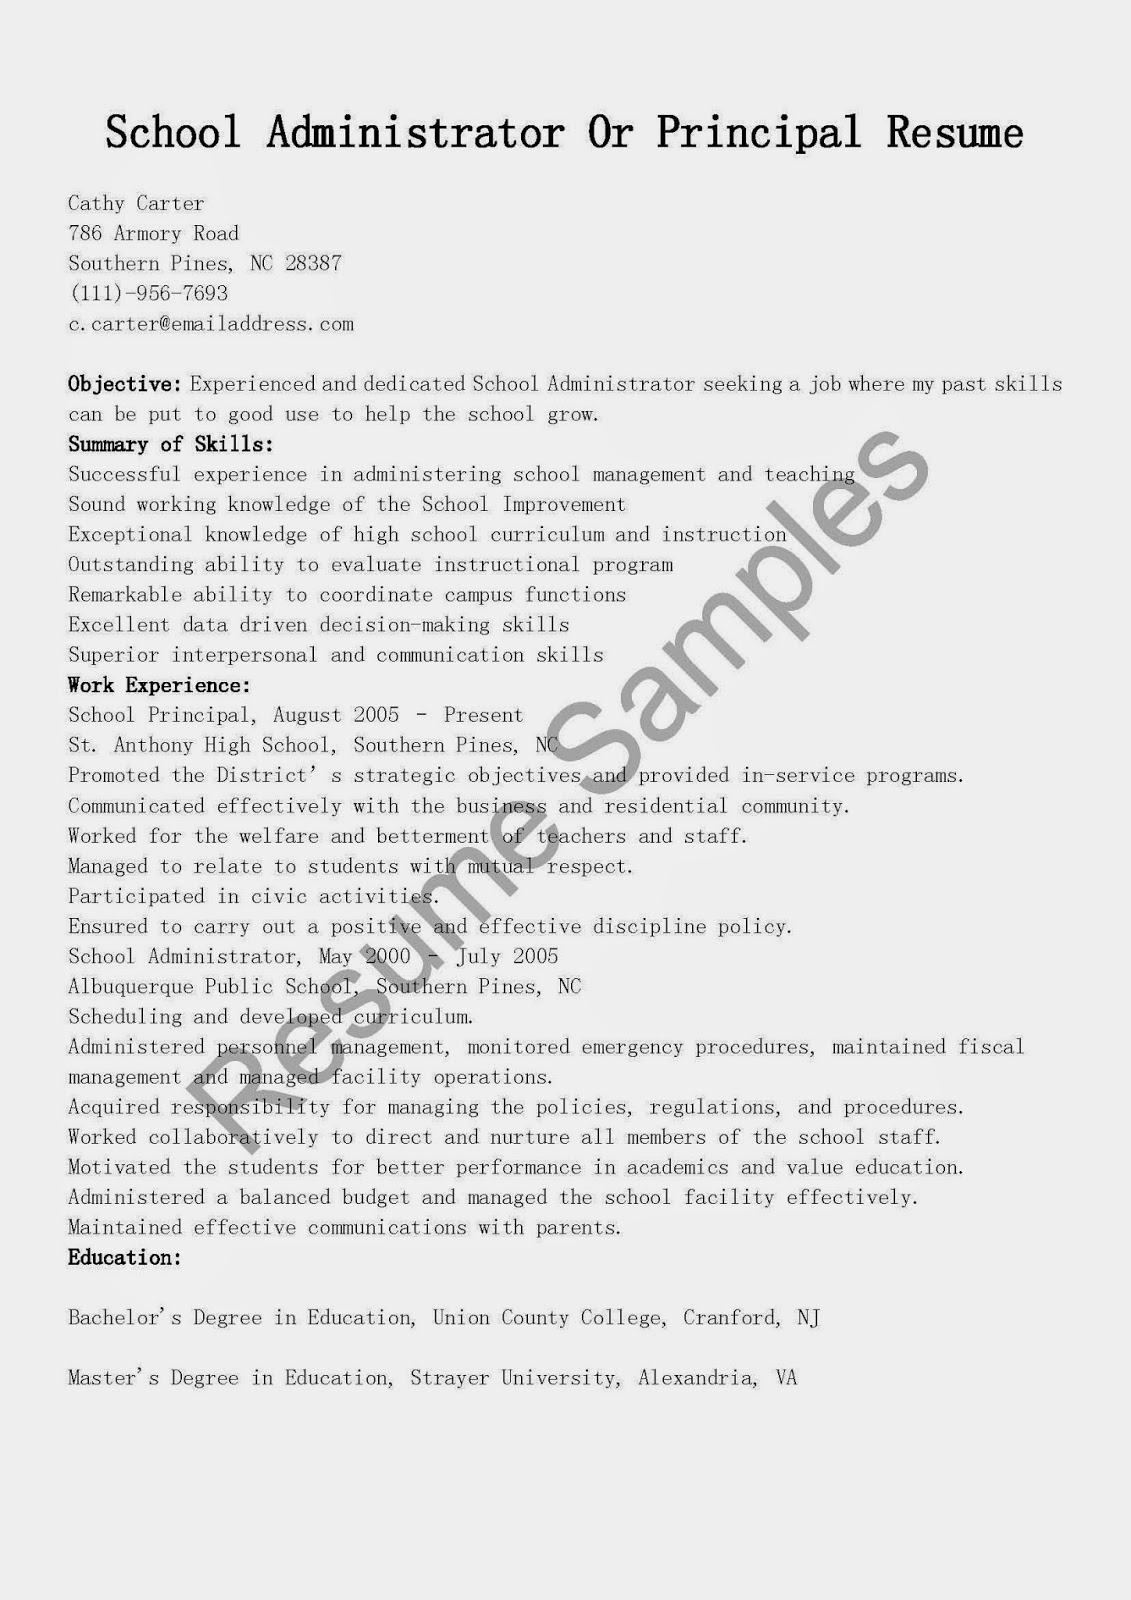 Resume Samples: School Administrator Or Principal Resume ...